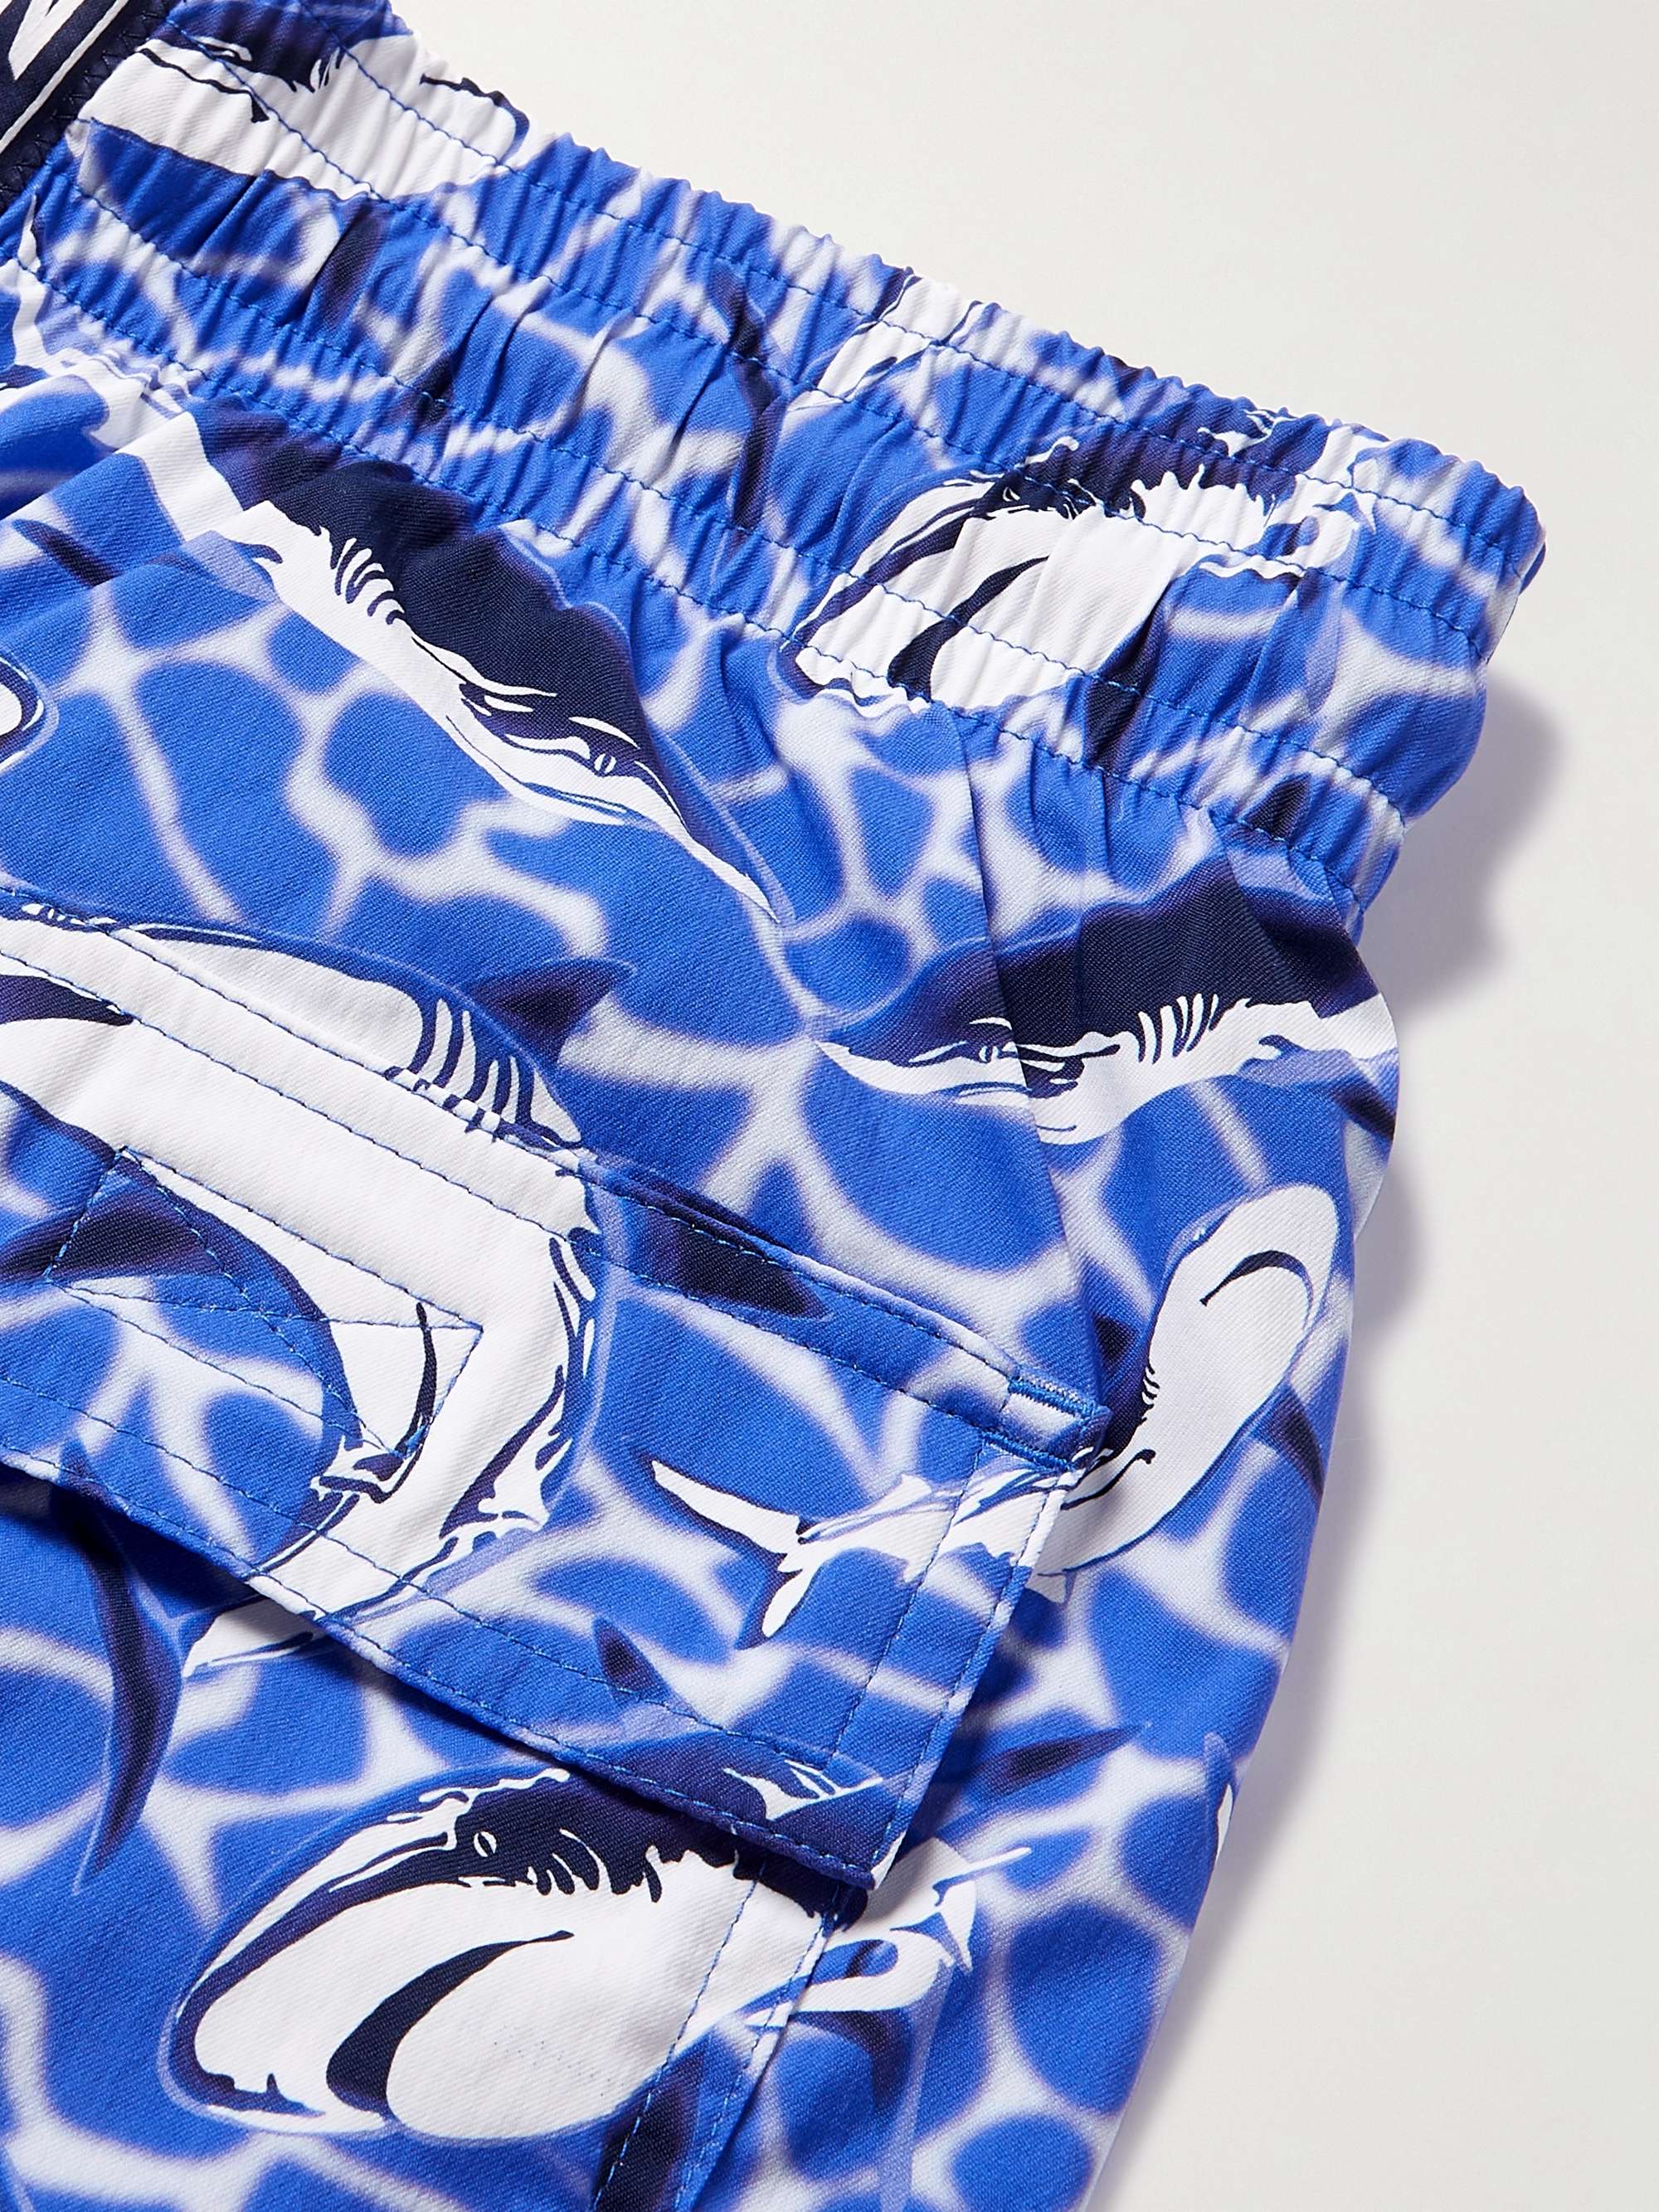 VILEBREQUIN Moorise Mid-Length Printed Swim Shorts